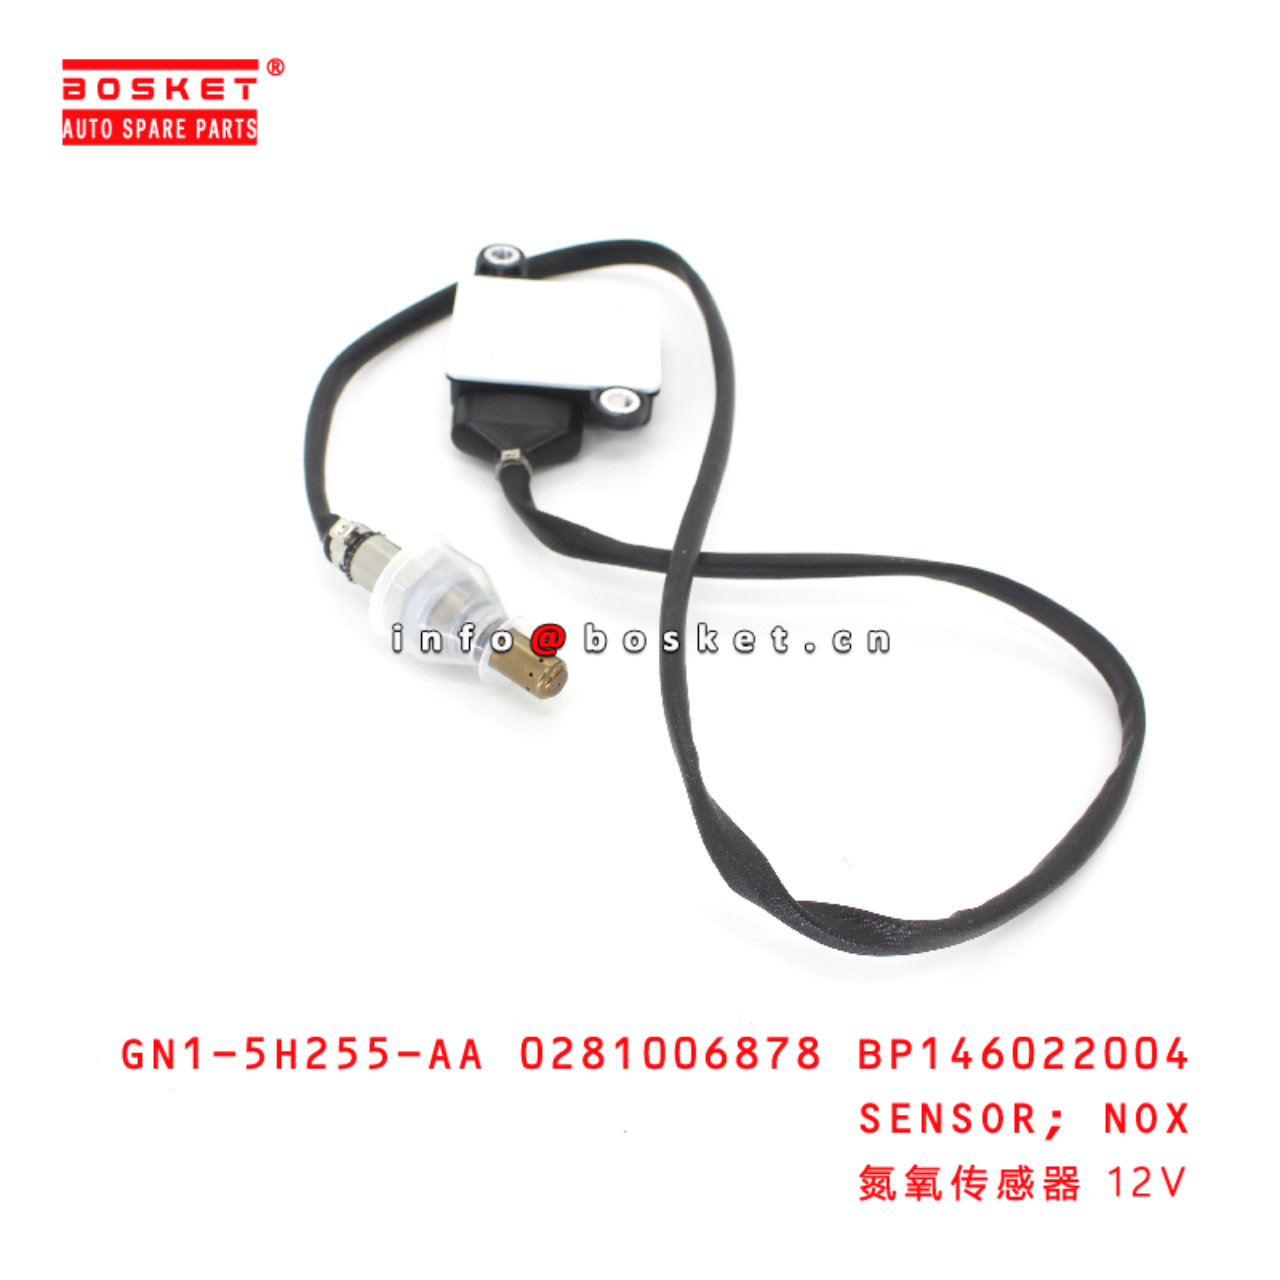 1203022-L20PA 0281006936 BP146022005 Nox Sensor suitable for JMC 1203022-L20PA